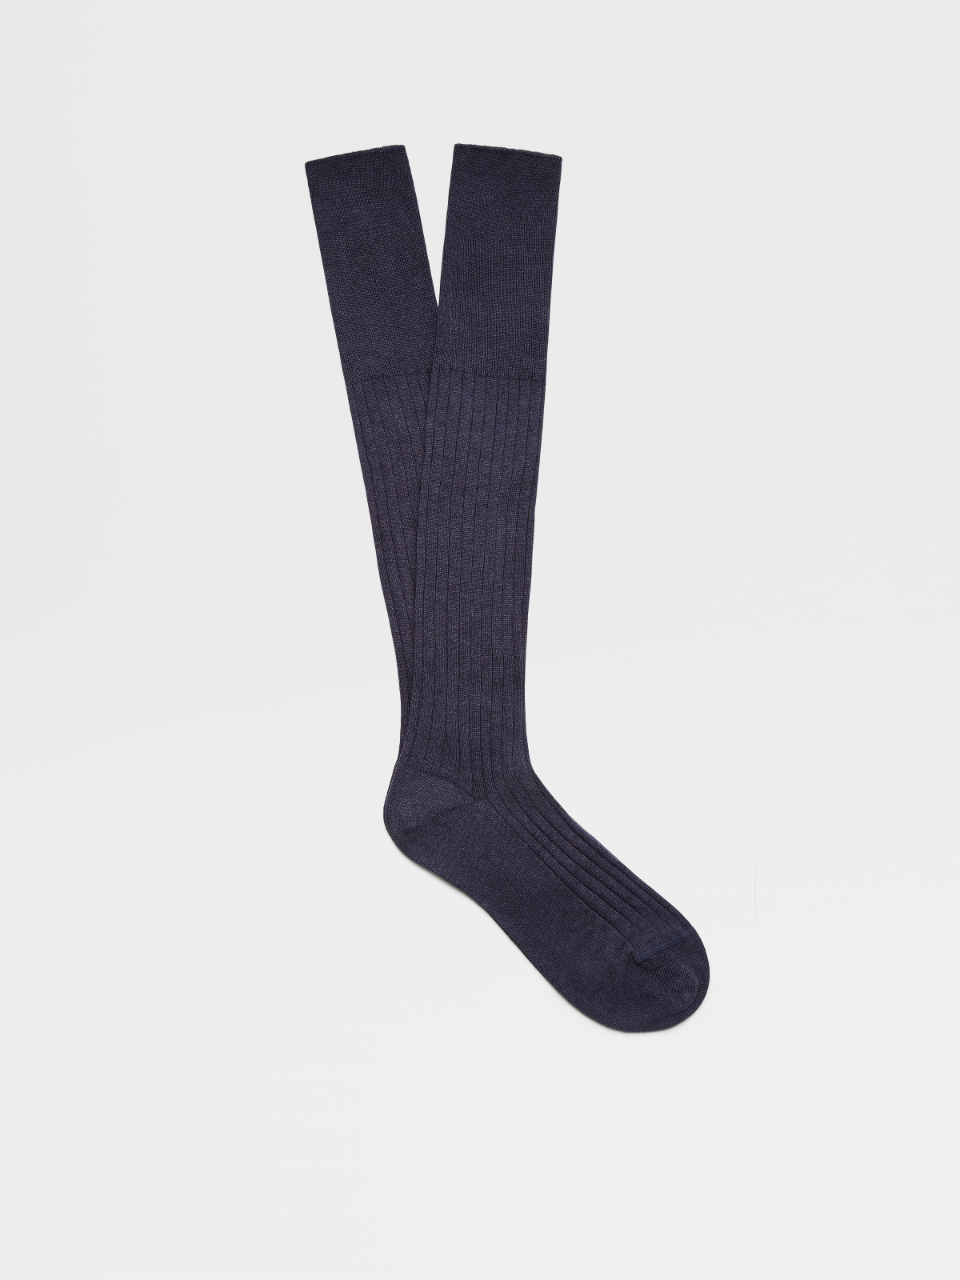 Navy Blue Organic Cotton Cashmere and Silk Mid Calf Socks